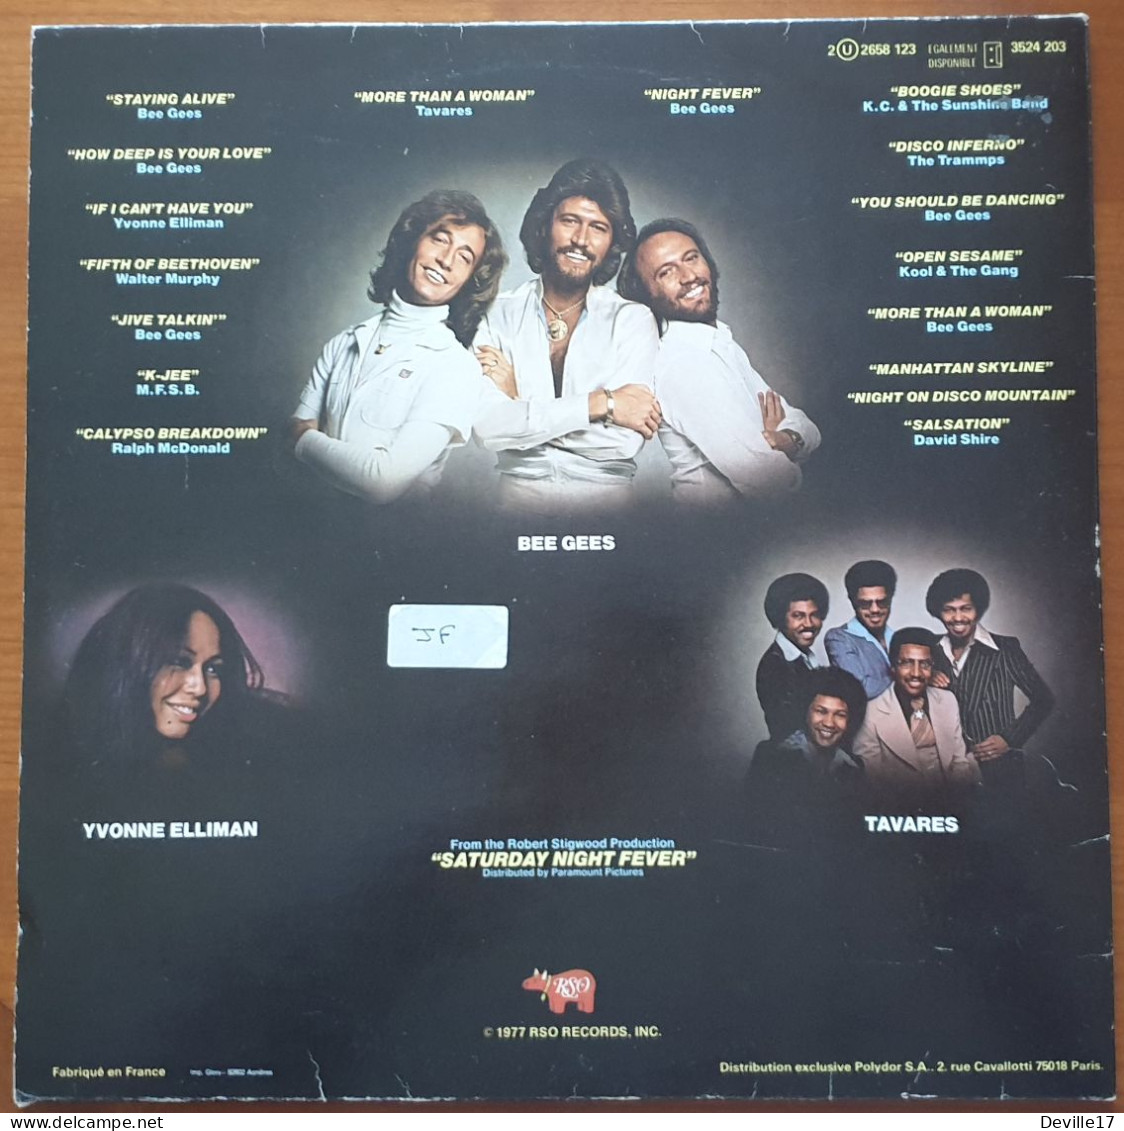 BEE GEES - DOUBLE ALBUM "SATURDAY NIGHT FEVER" - RSO RECORDS, INC - POLYDOR - 1977 - 2658 123 - Disco, Pop